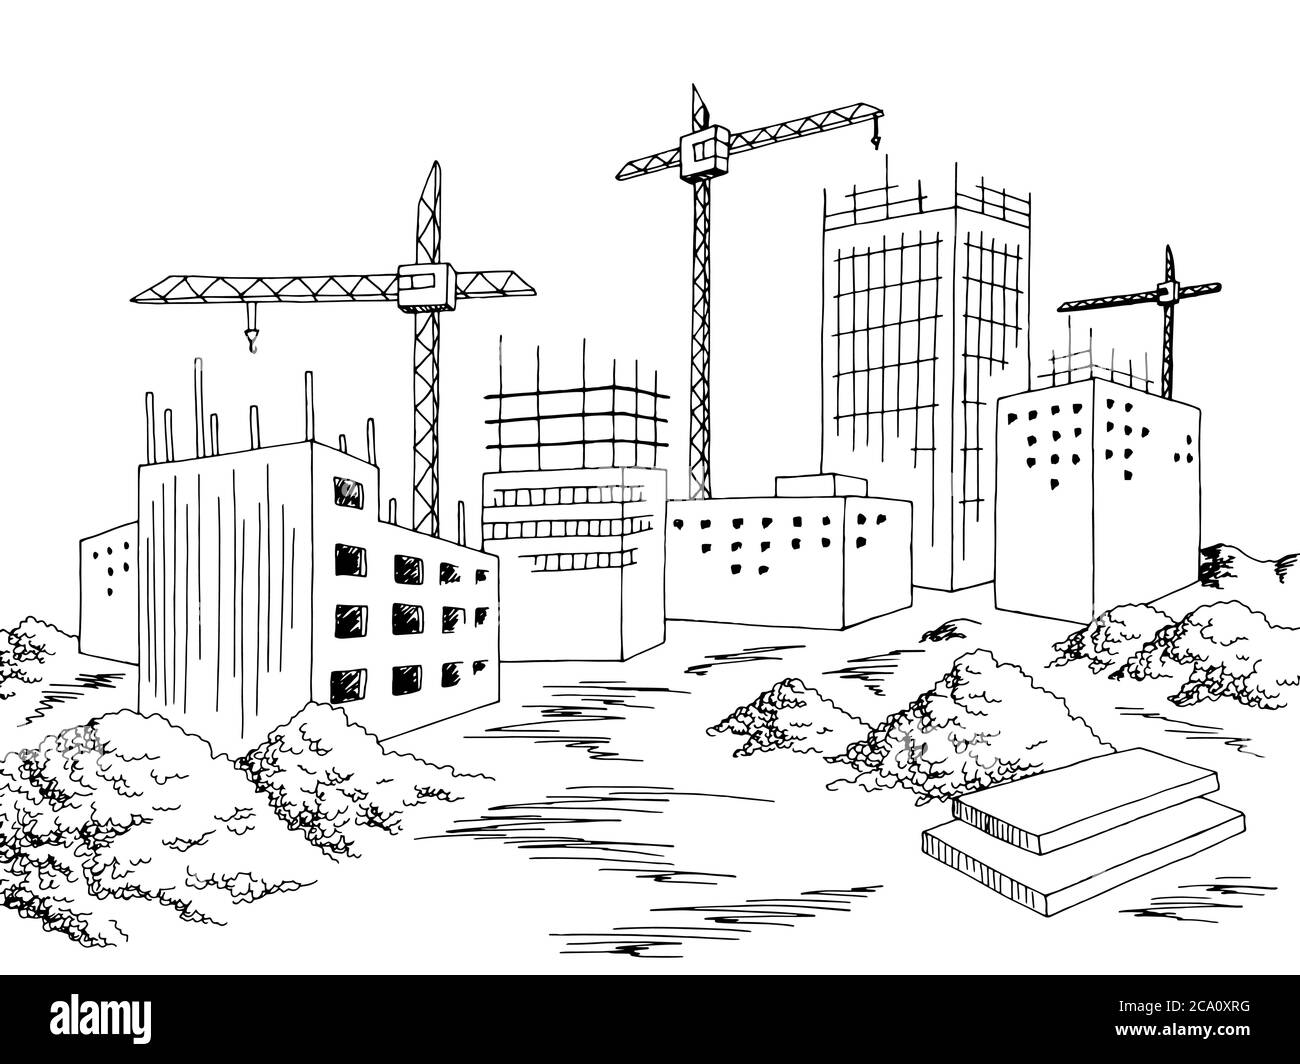 Konstruktion Stadtgebäude äußere Grafik schwarz weiß Stadtbild Skyline Skizze Illustration Vektor Stock Vektor